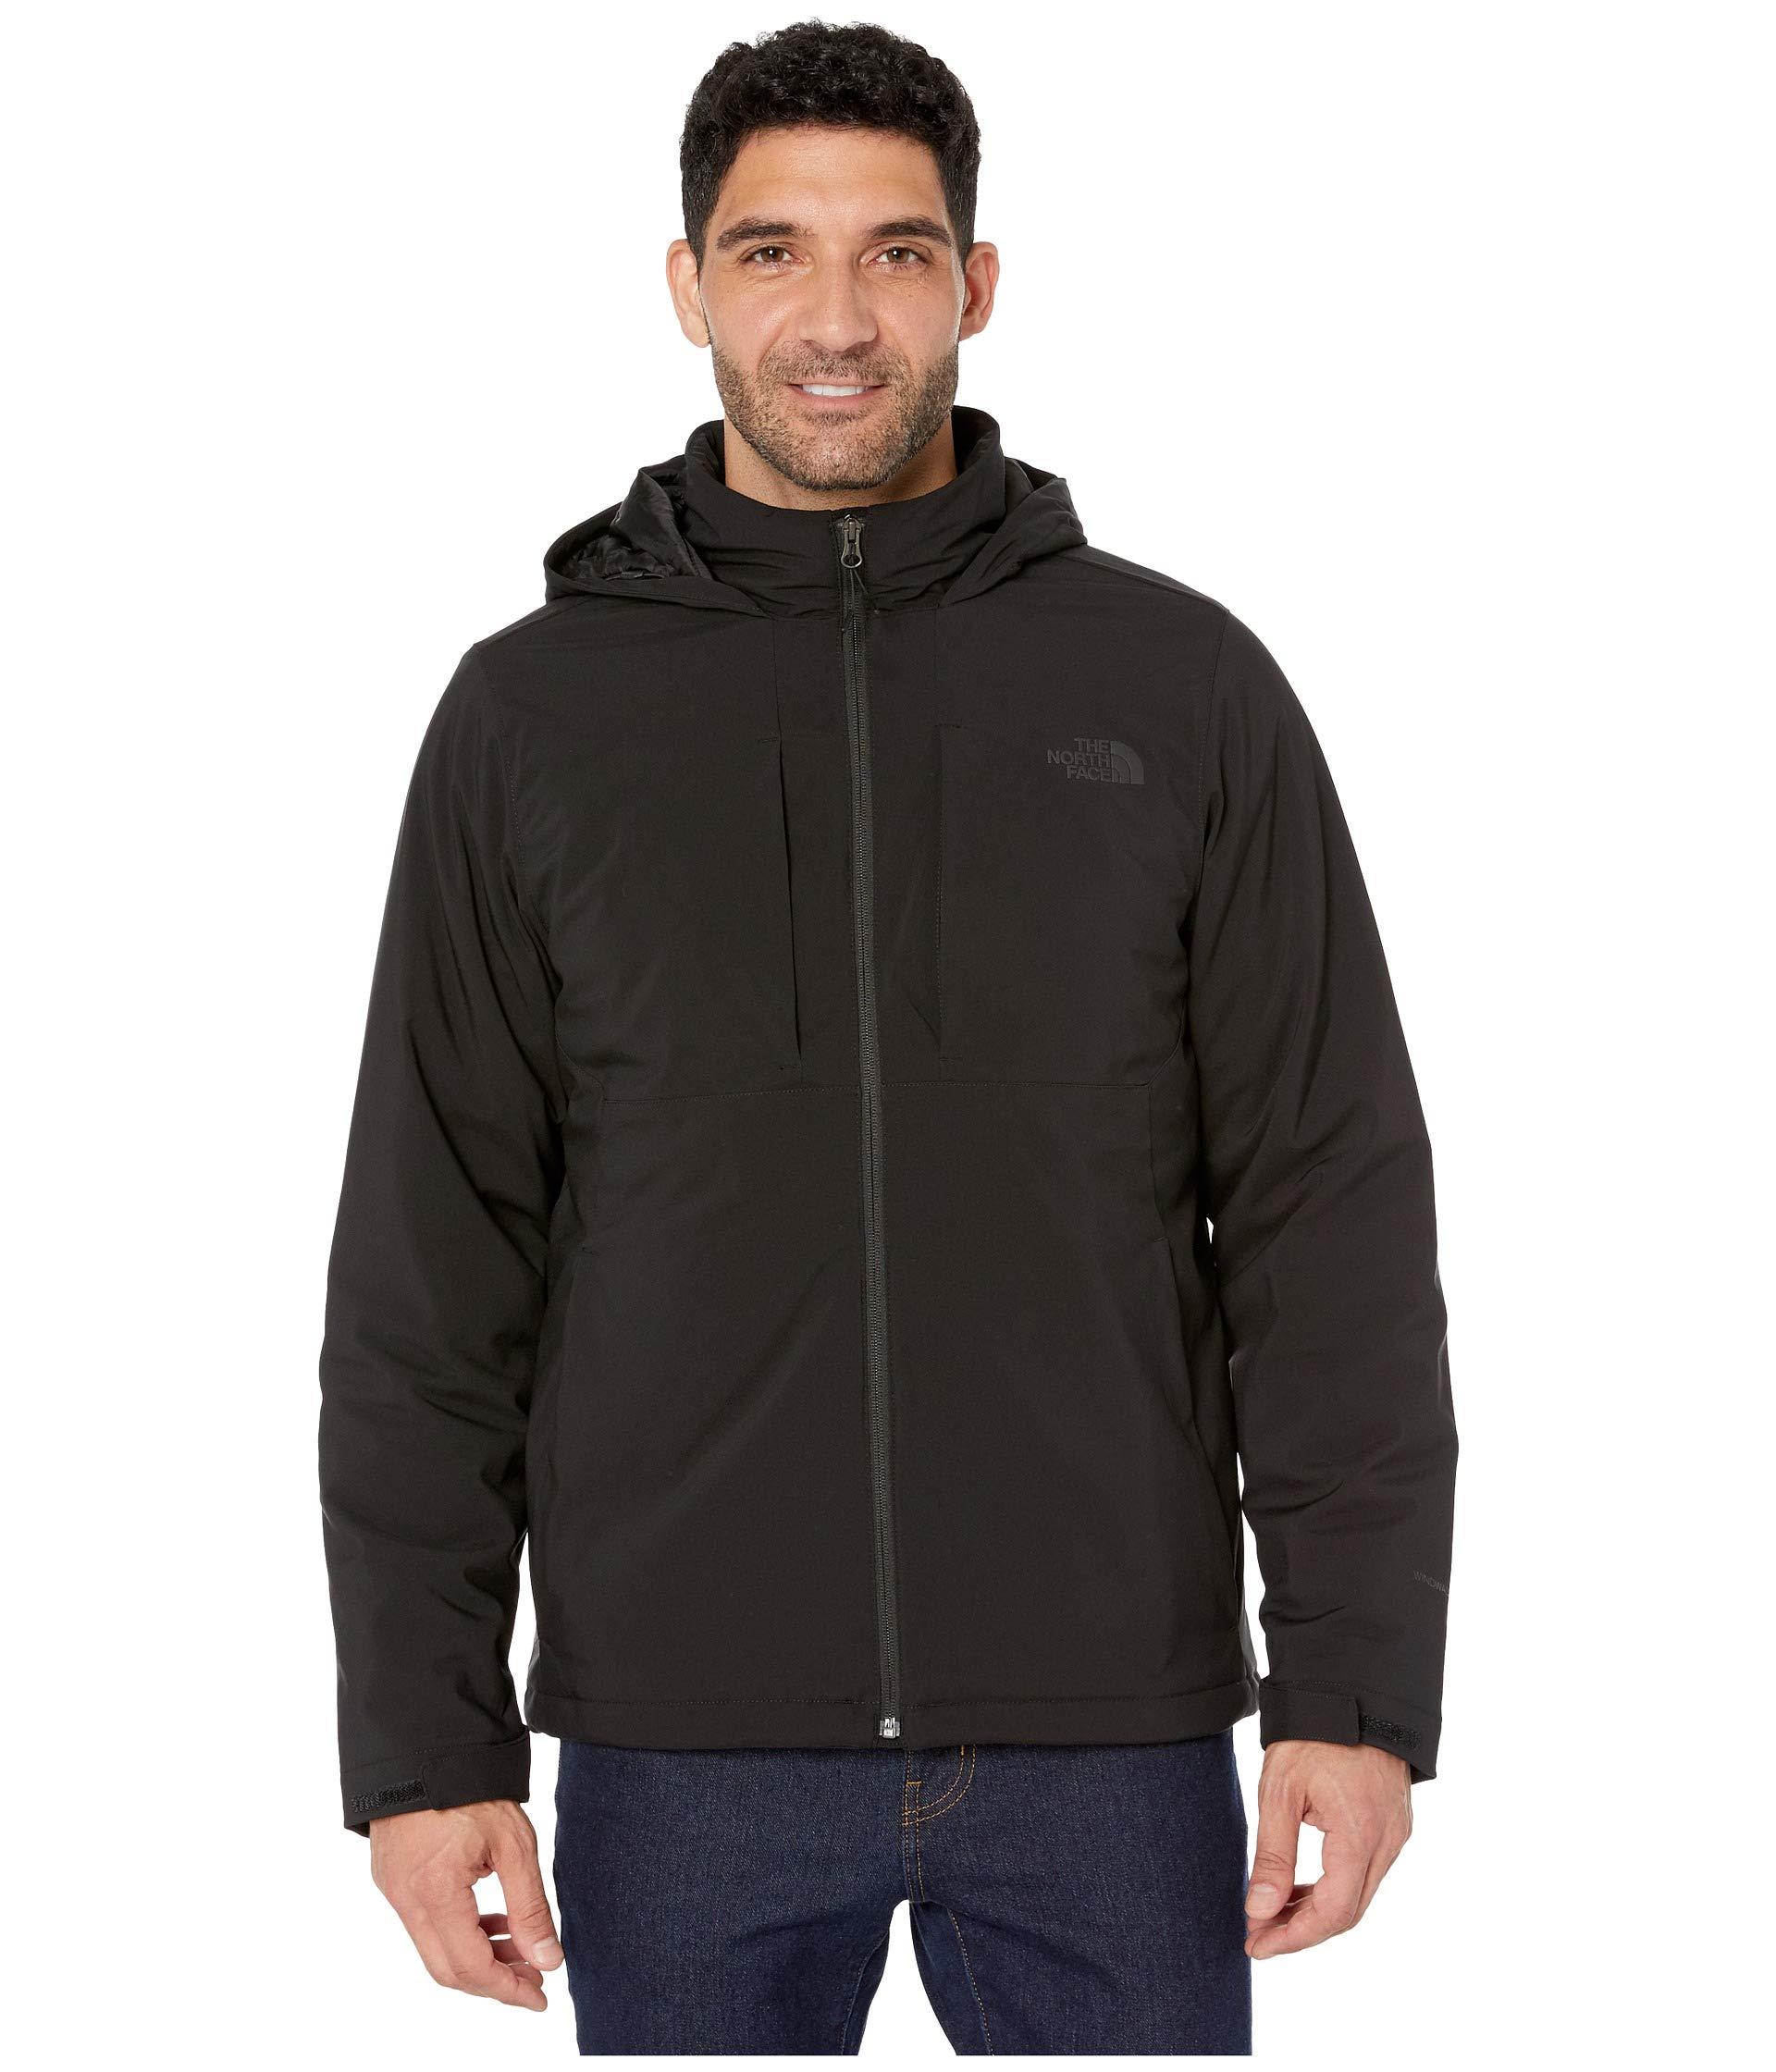 The North Face Fleece Apex Elevation Jacket in Black for Men - Lyst